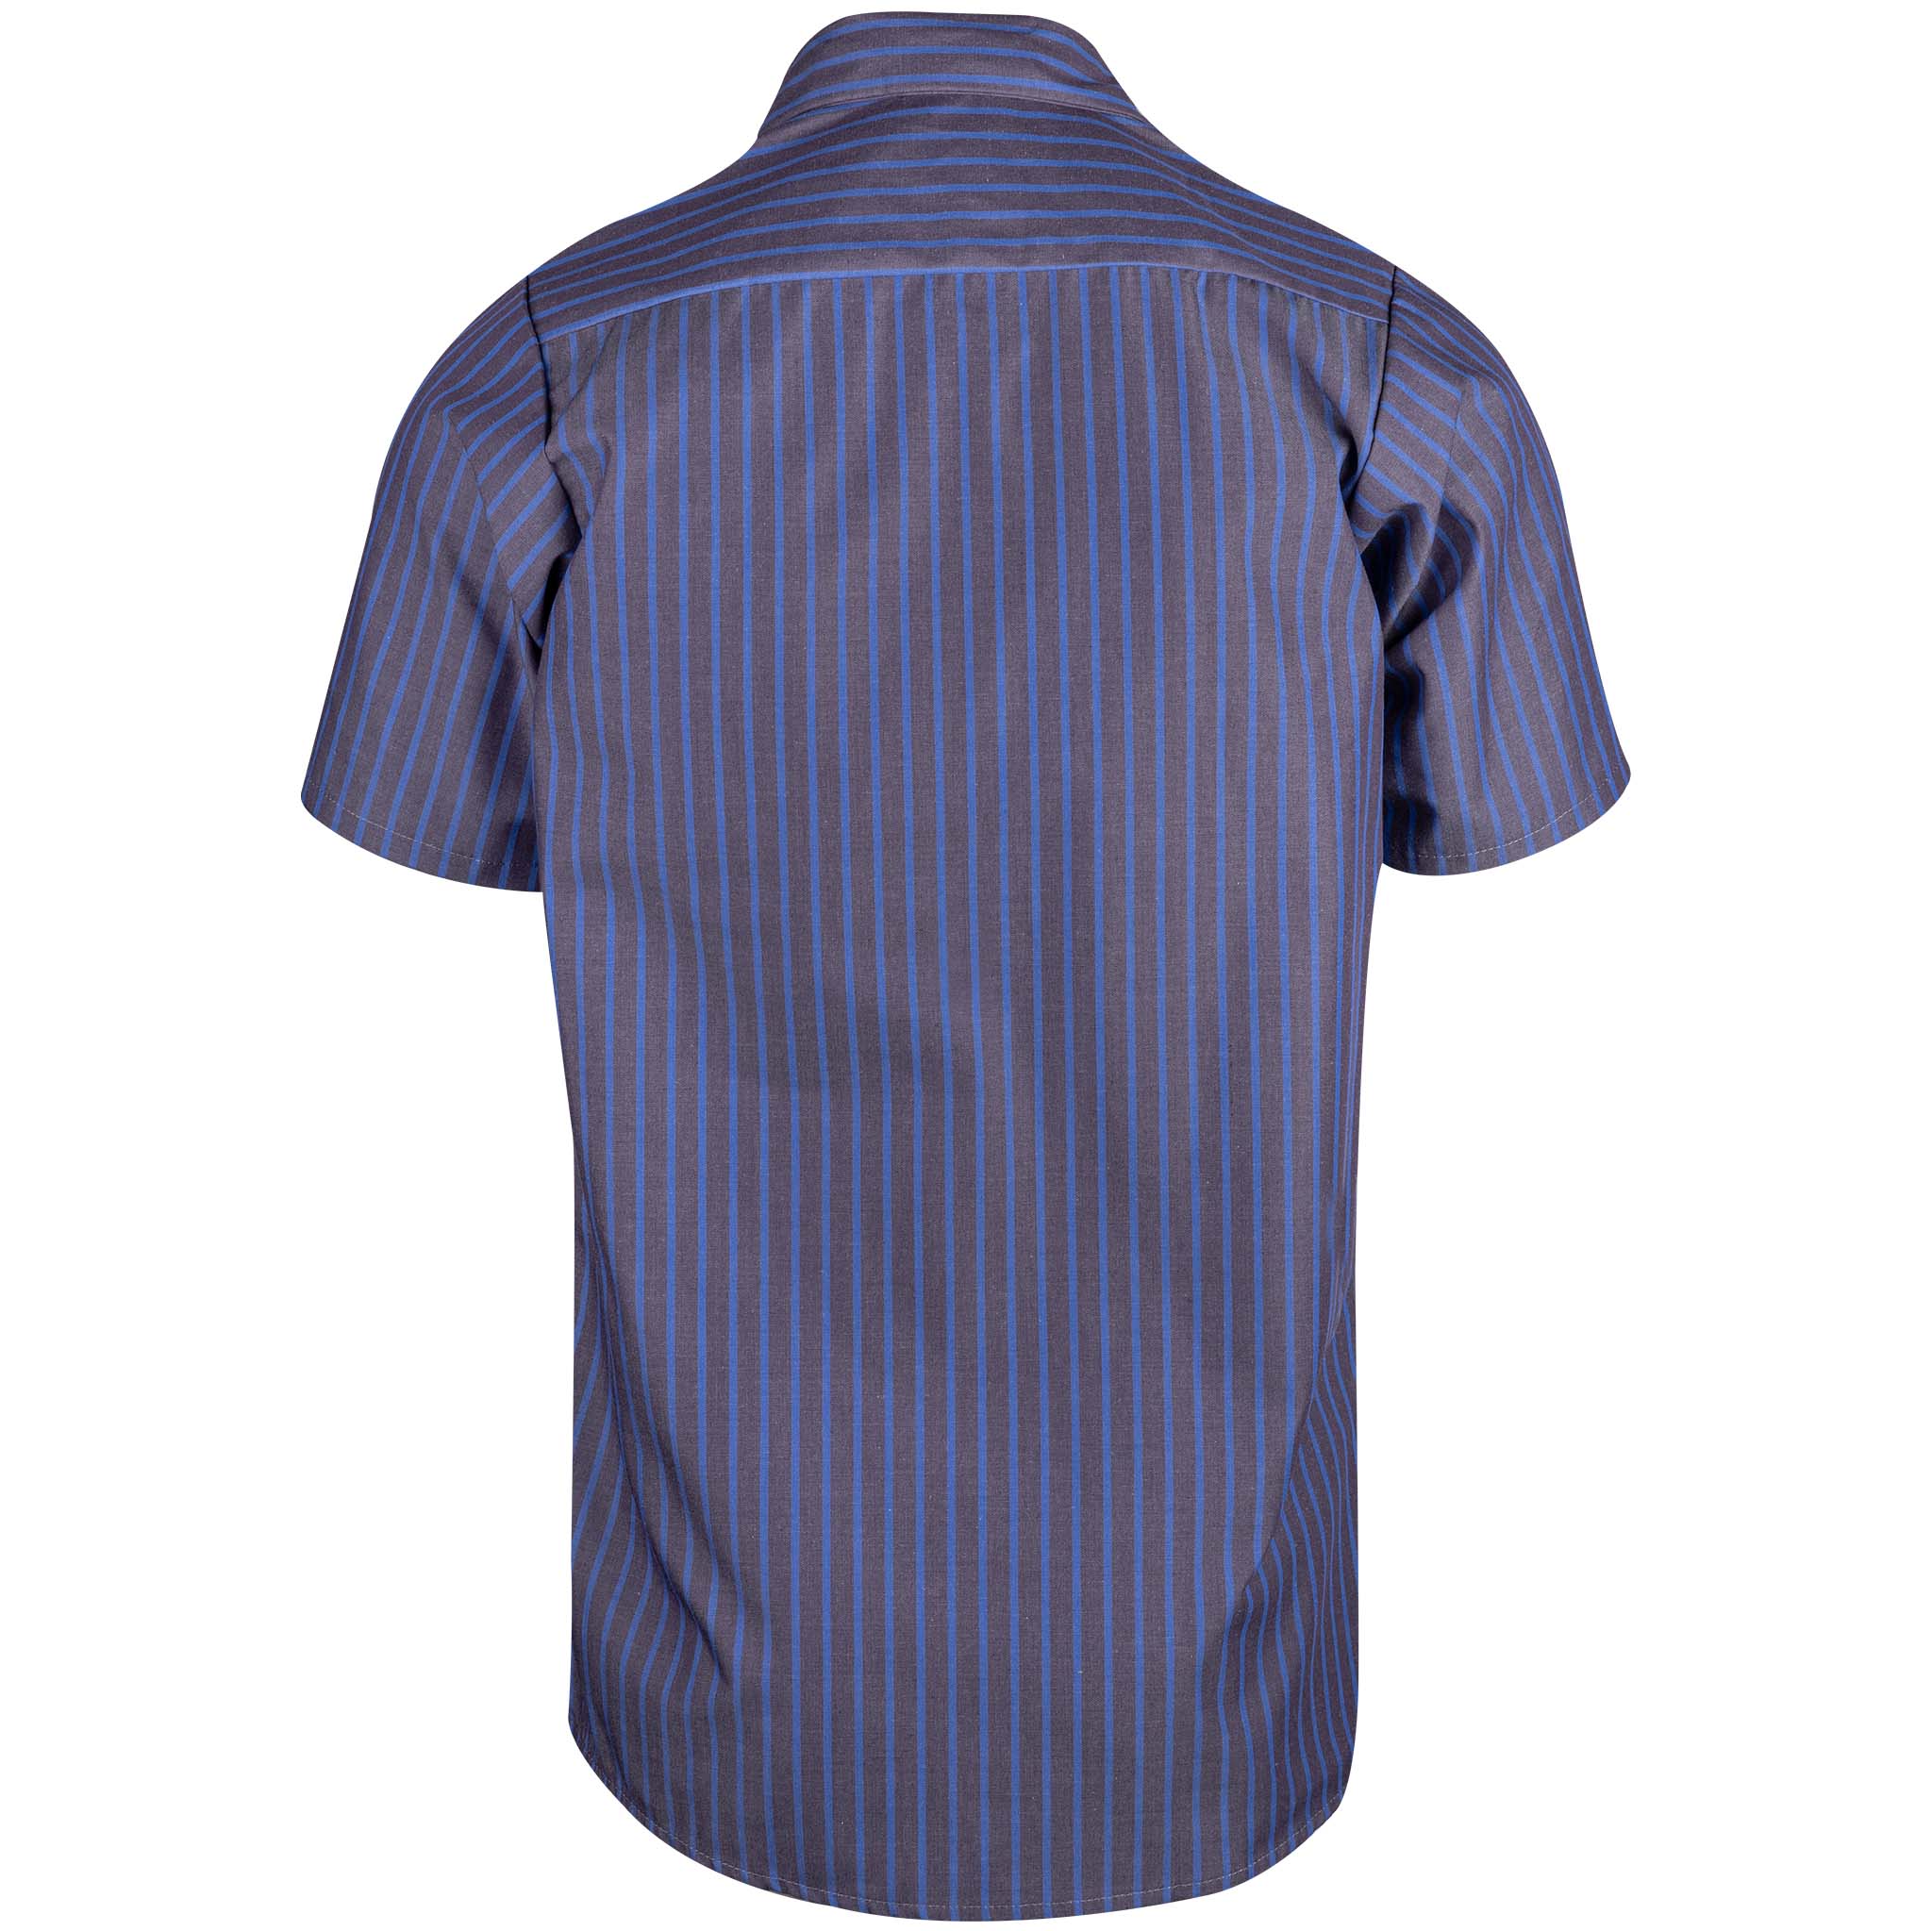 Industrial Work Shirt Blue/Charcoal Stripe Back